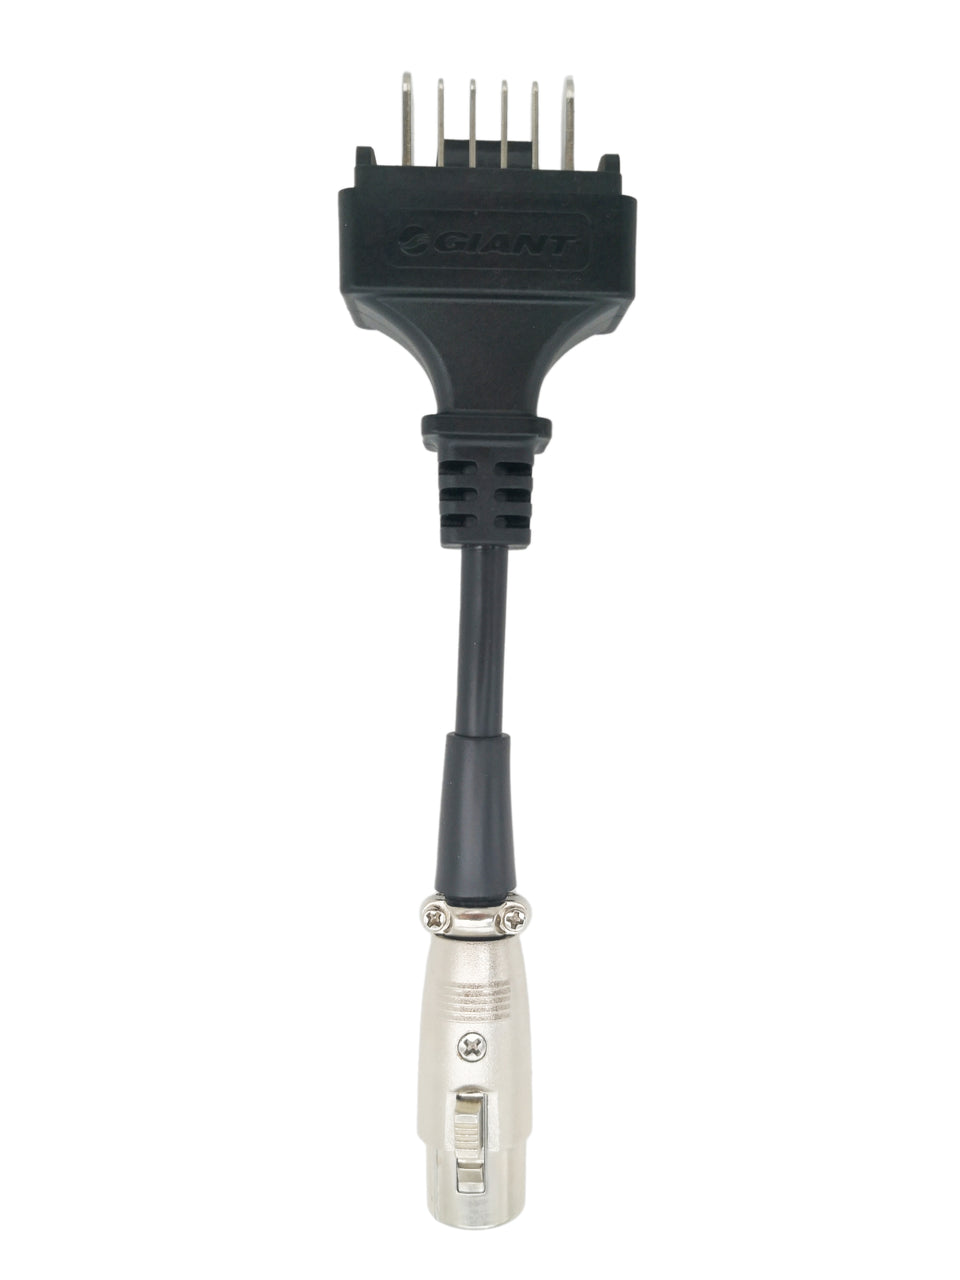 Powerbutler adapter cable for Samsung SDI batteries